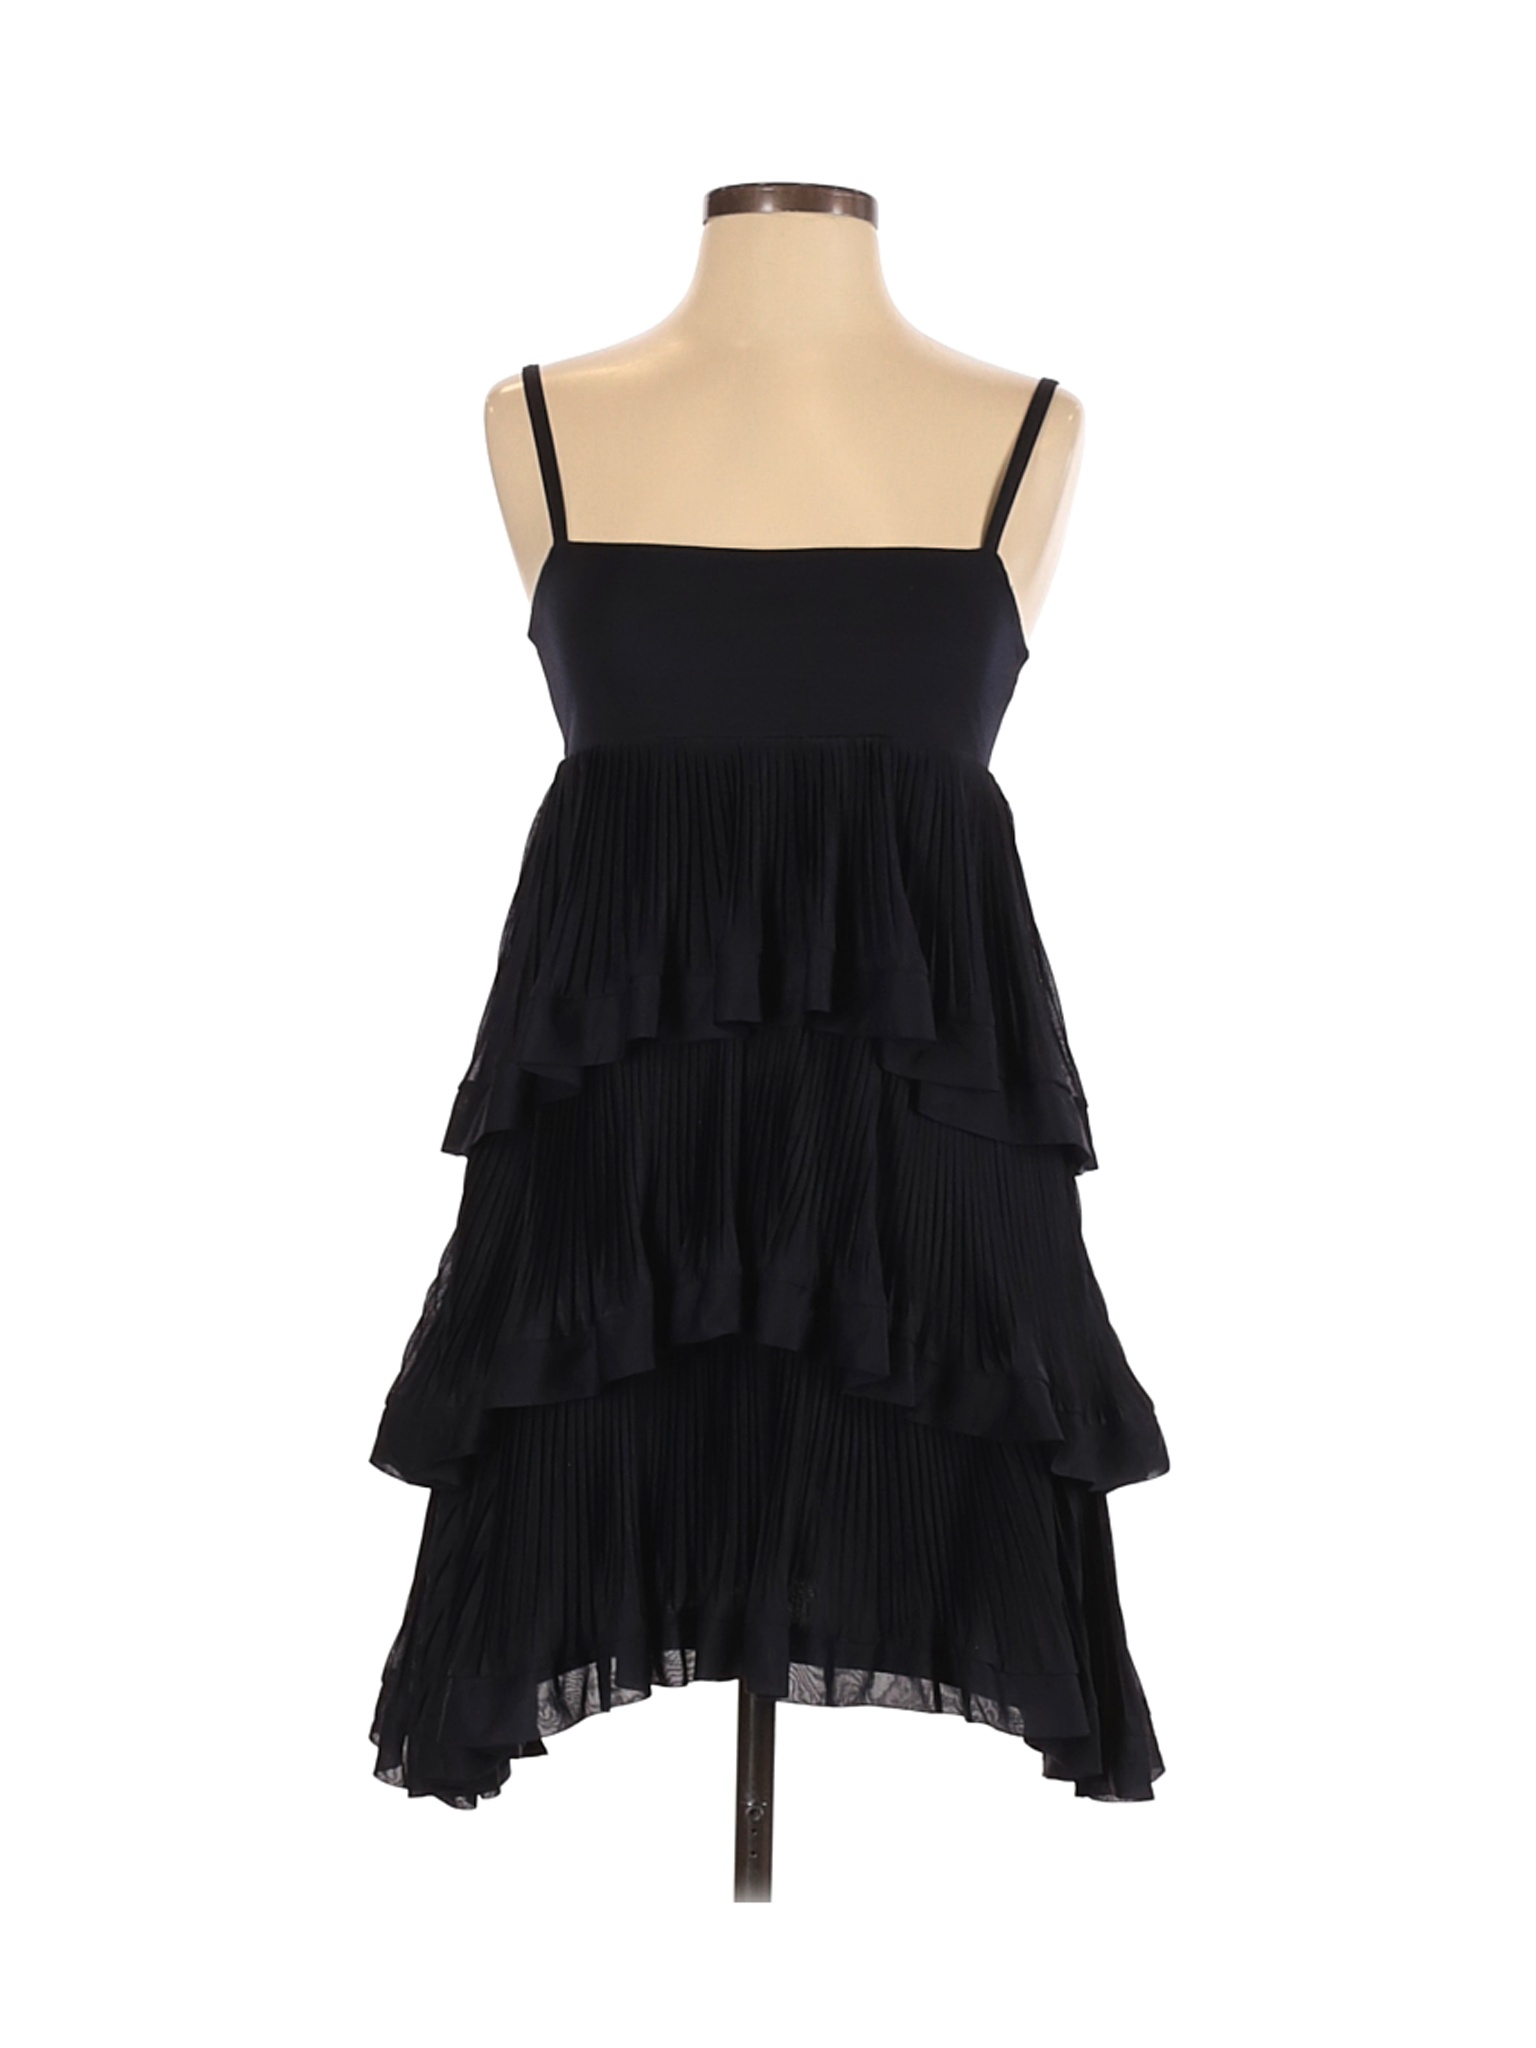 H&M Women Black Cocktail Dress XS | eBay